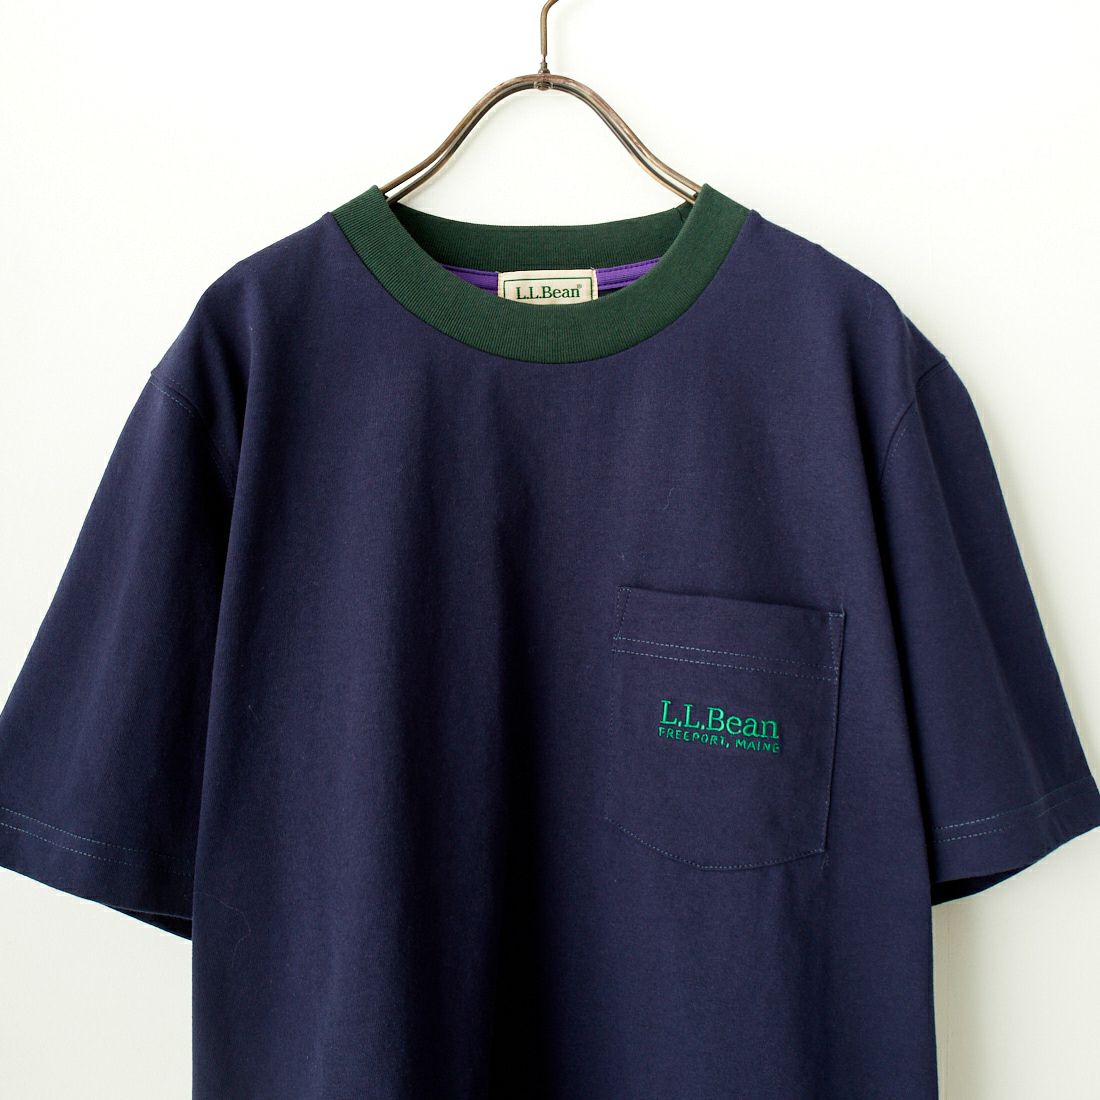 L.L.BEAN [エルエルビーン] リンガーポケットTシャツ [4275-6065]